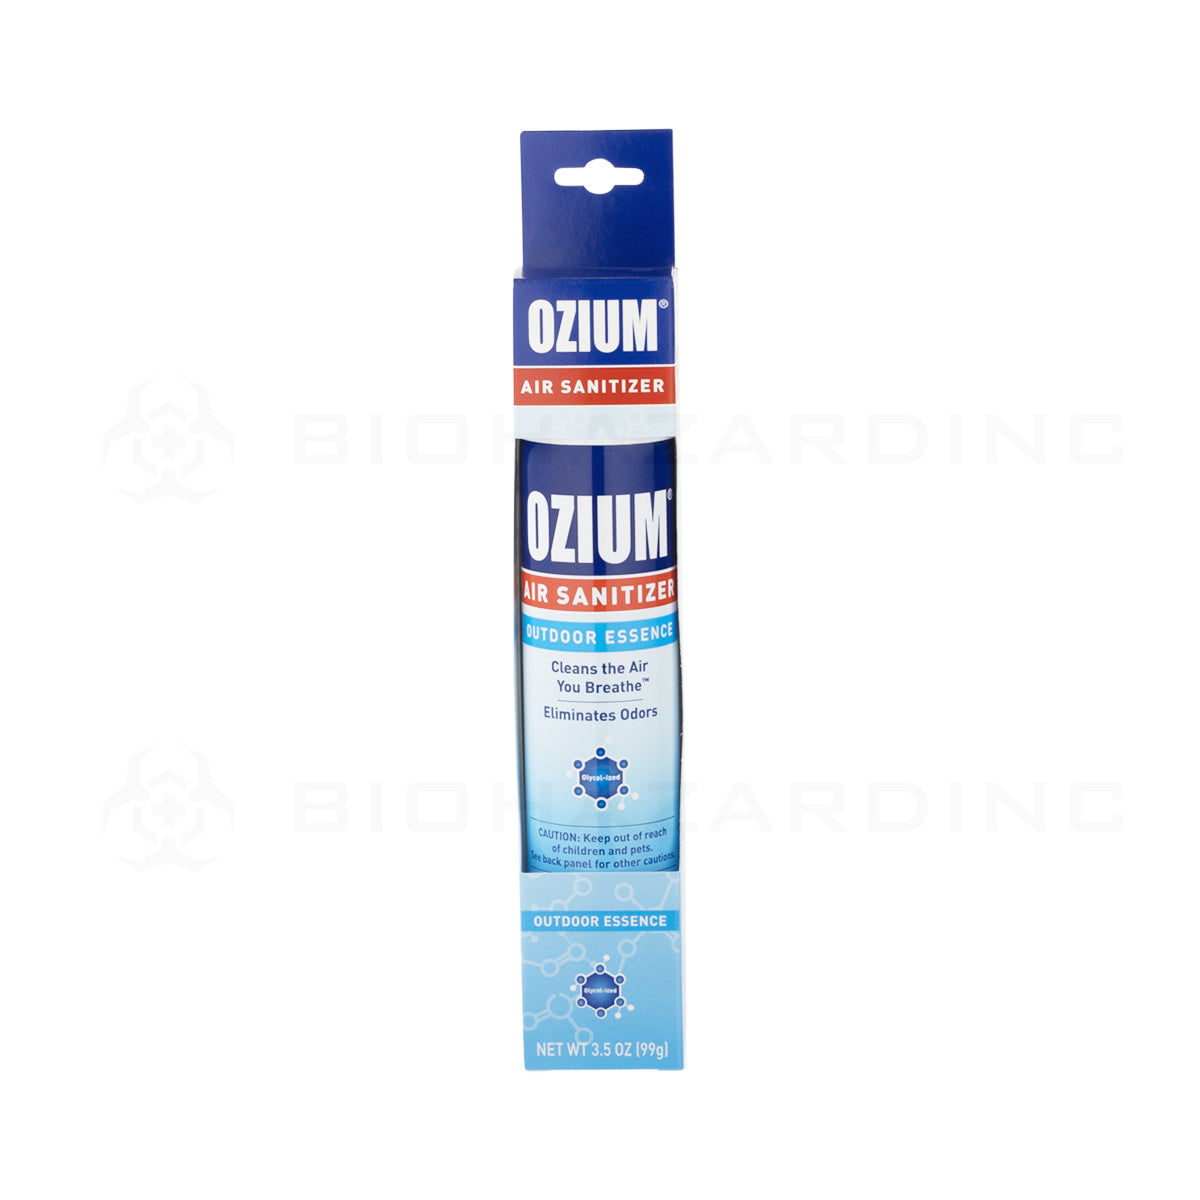 OZIUM® | Outdoor Essence Scent Air Sanitizer - Various Sizes Air Freshener Biohazard Inc   